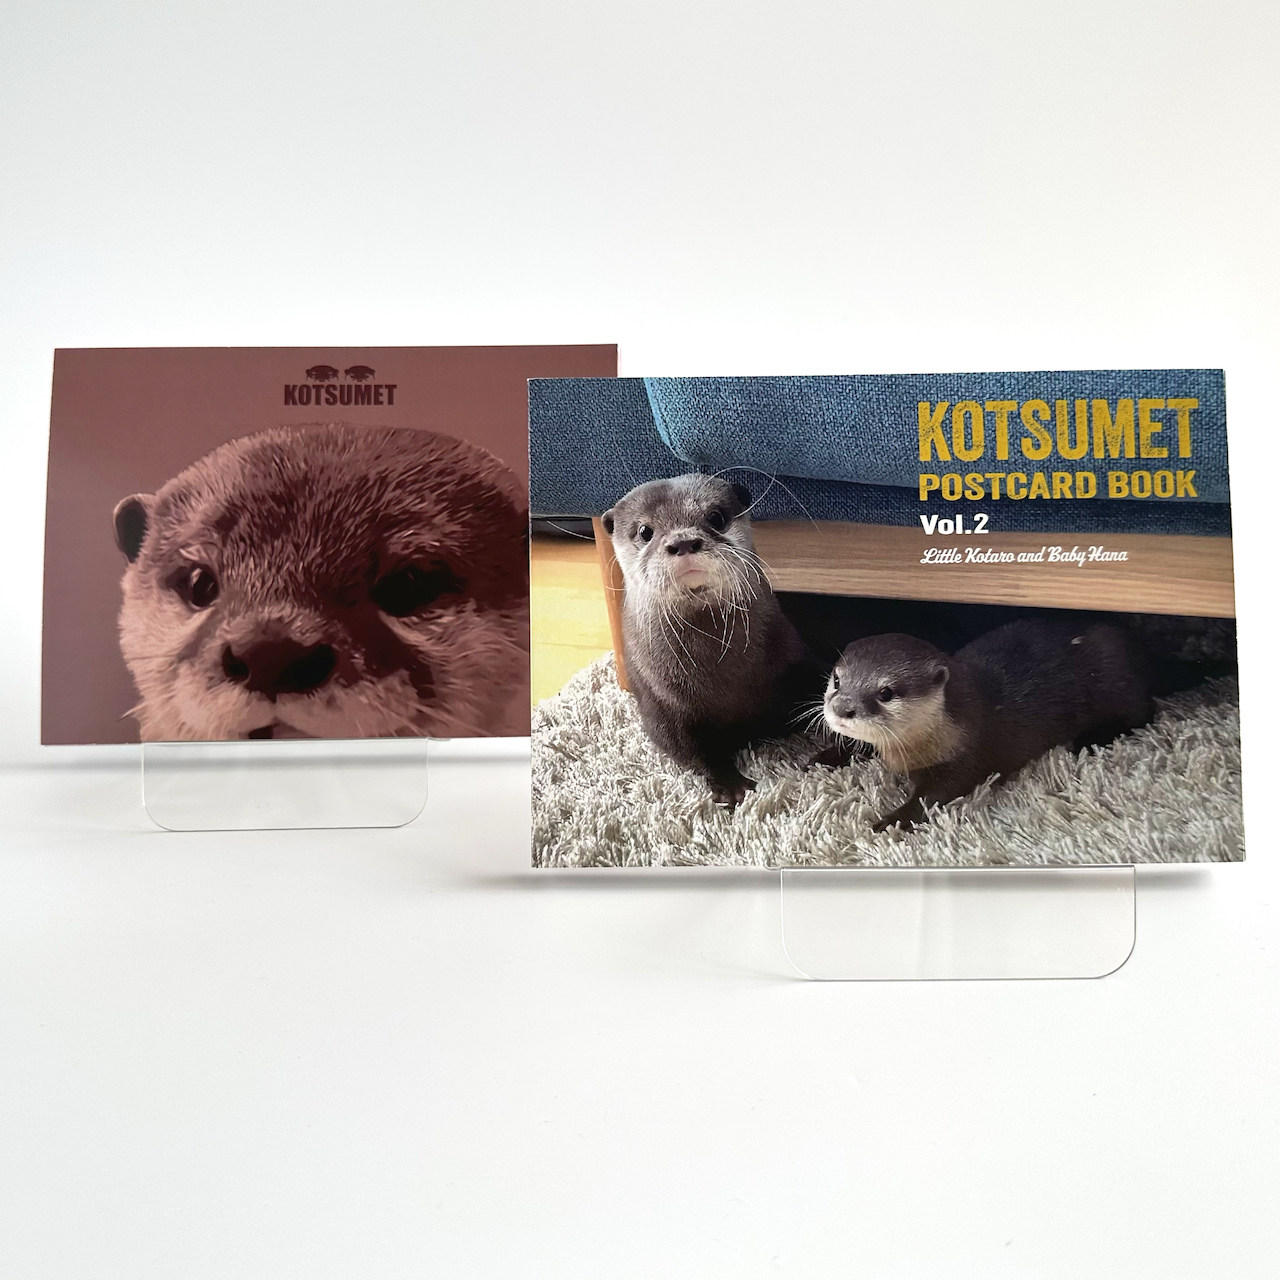 ka wow sokota low is Nami ni photo book Vol.2 postcard photoalbum animal animal .... goods 